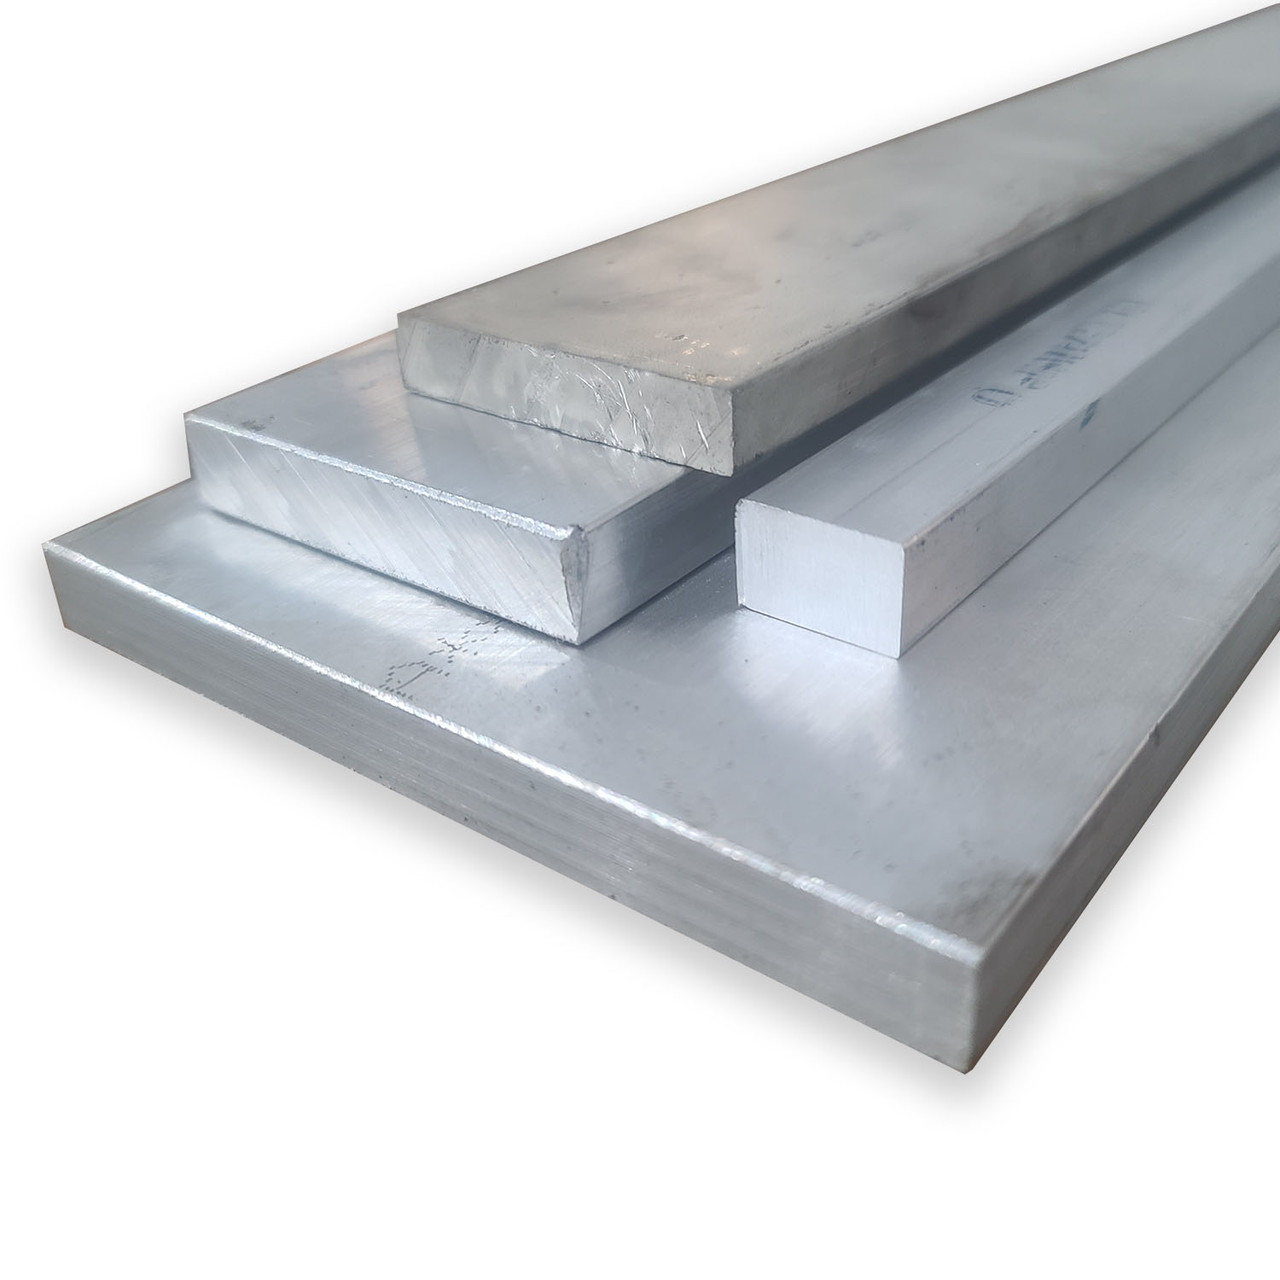 0.500" x 1" x 10" (3 Pack), 6061-T6511 Aluminum Flat Bar